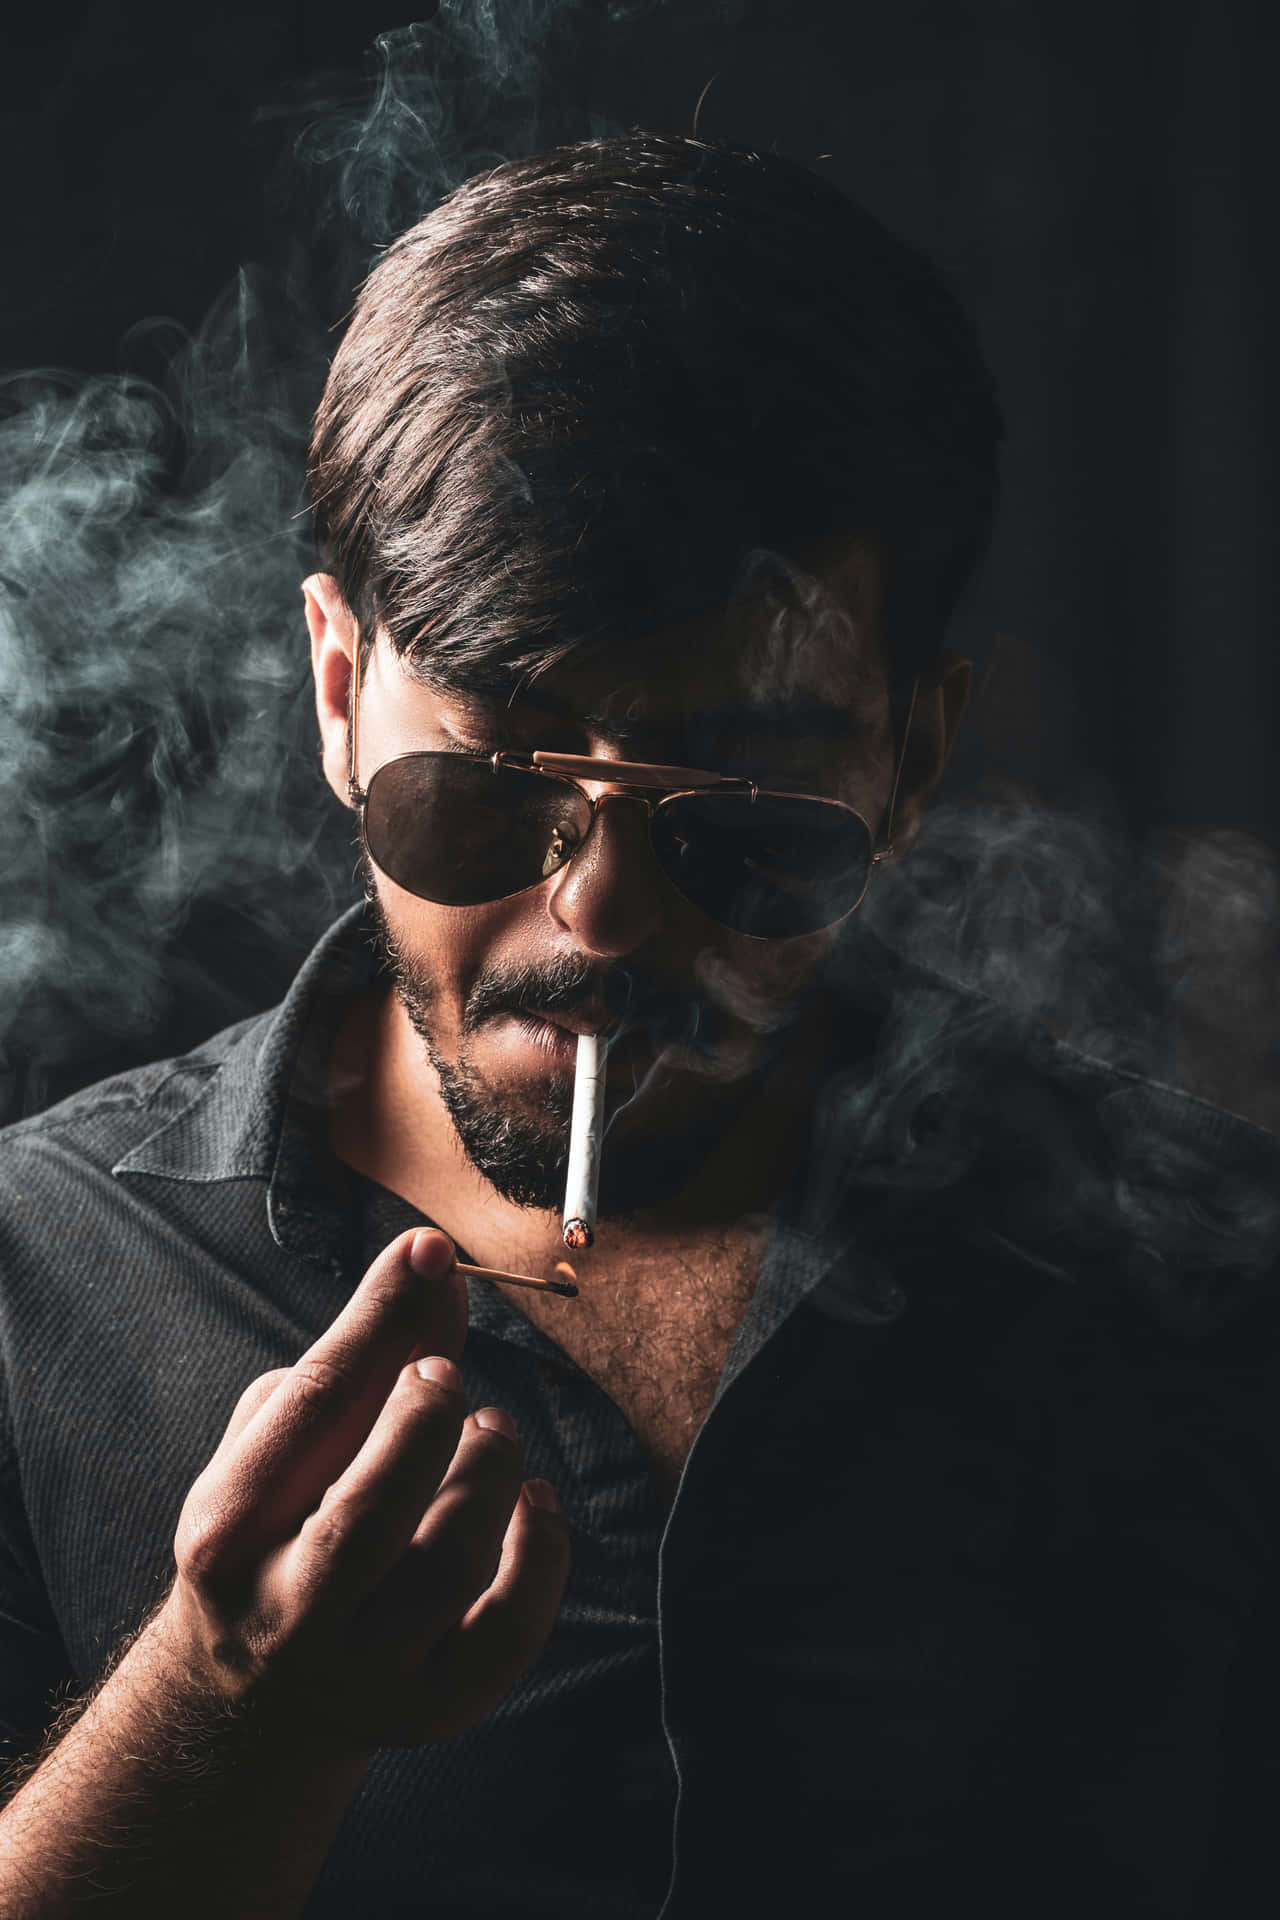 Sunglasses Man With Smoking Addiction Wallpaper